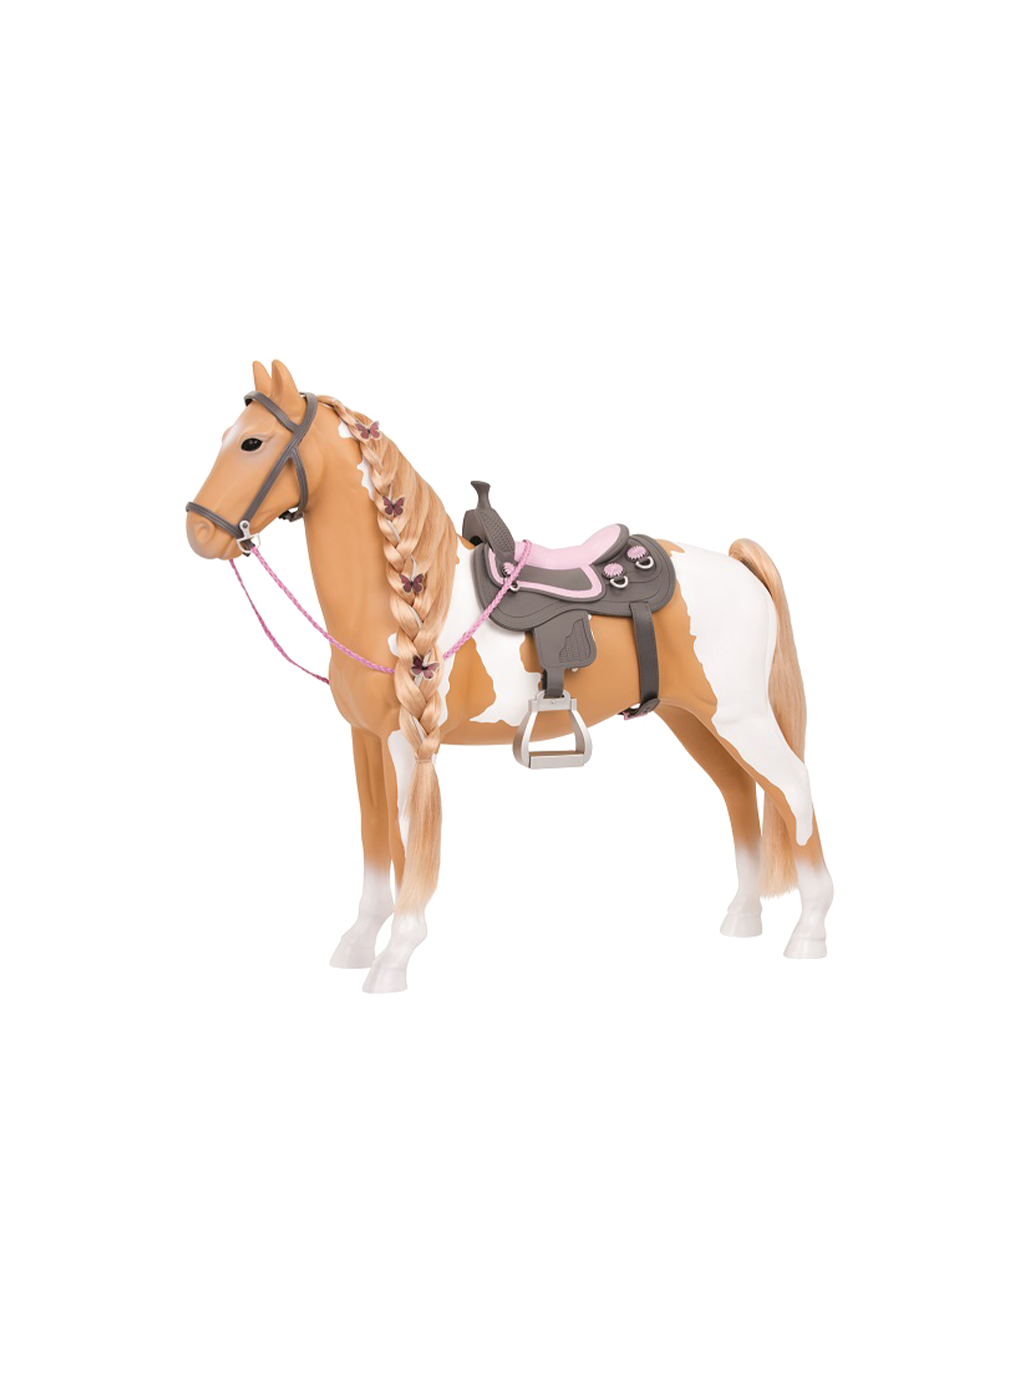 Großes 50 cm großes Palomino-Pferd mit Zubehör